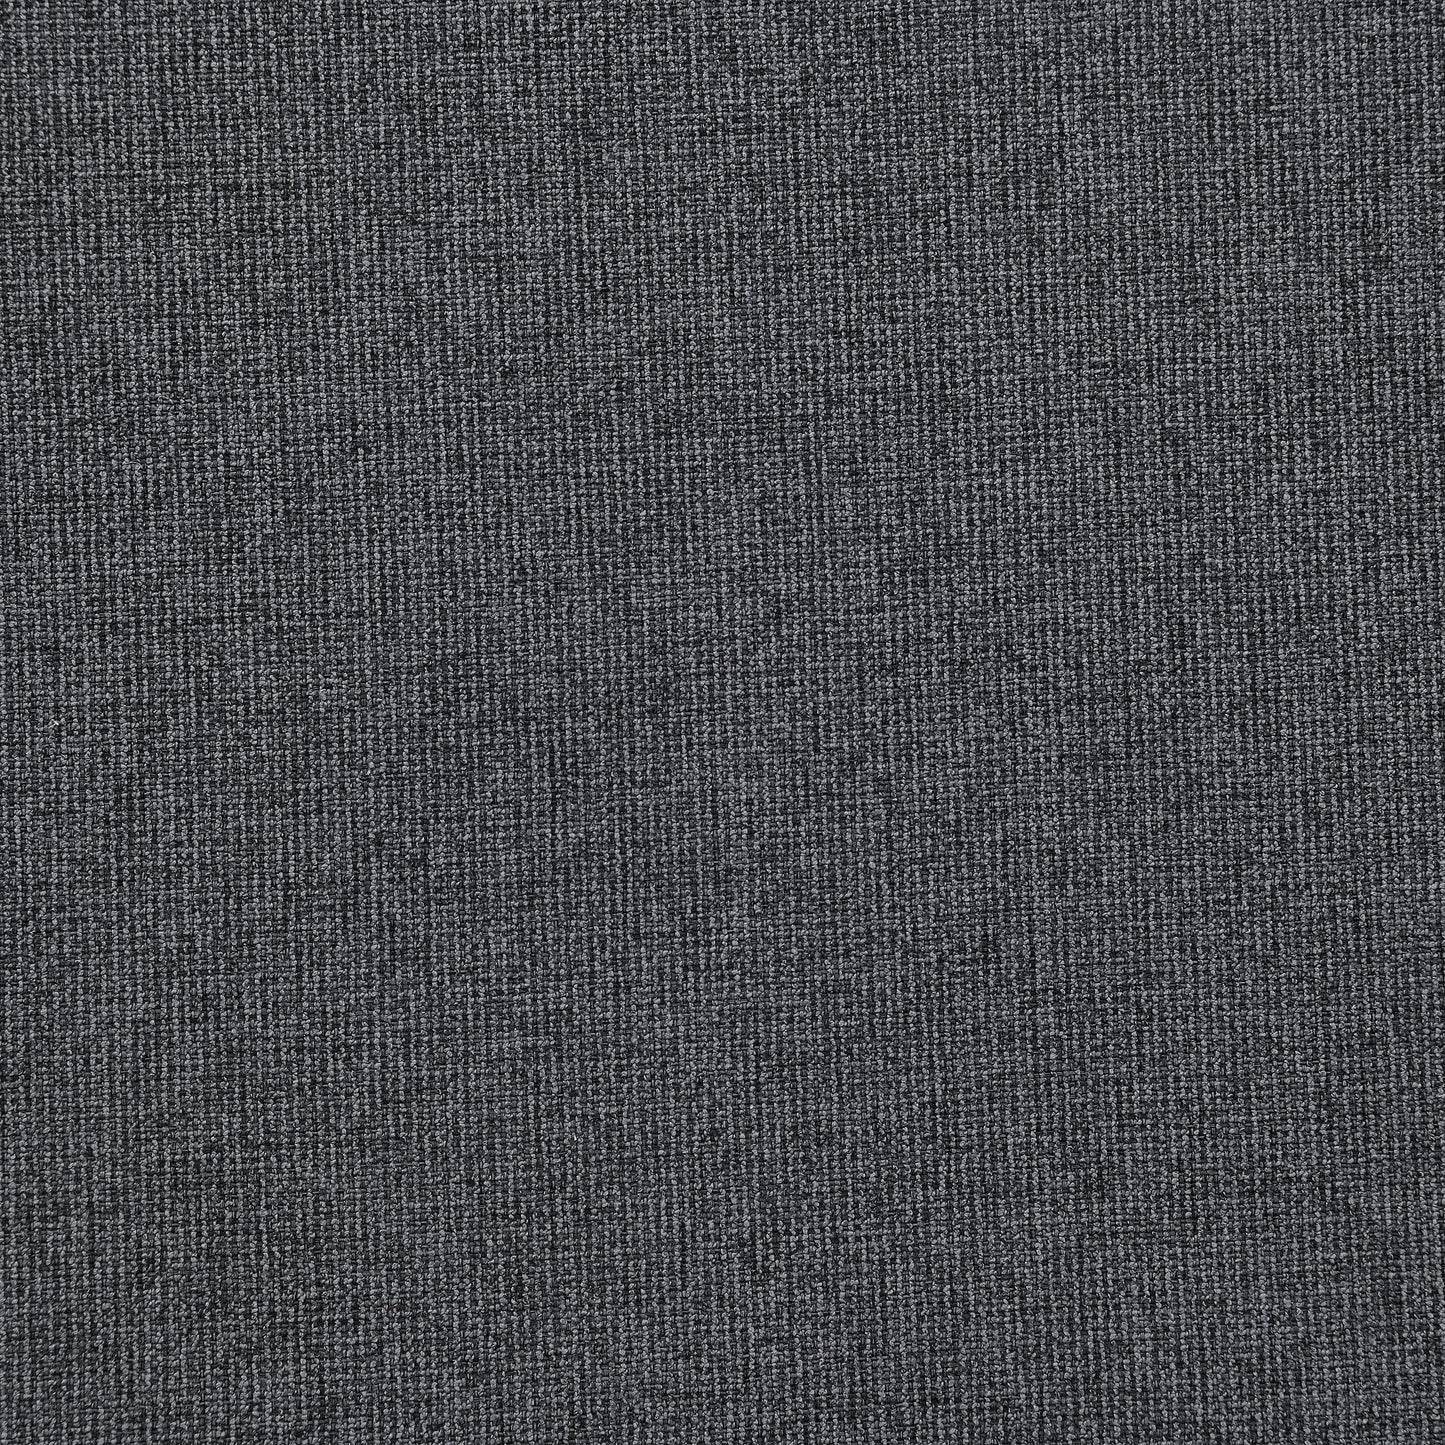 Monyanta Modern Linen Fabric Sofa with Armrest Pockets in Dark Grey